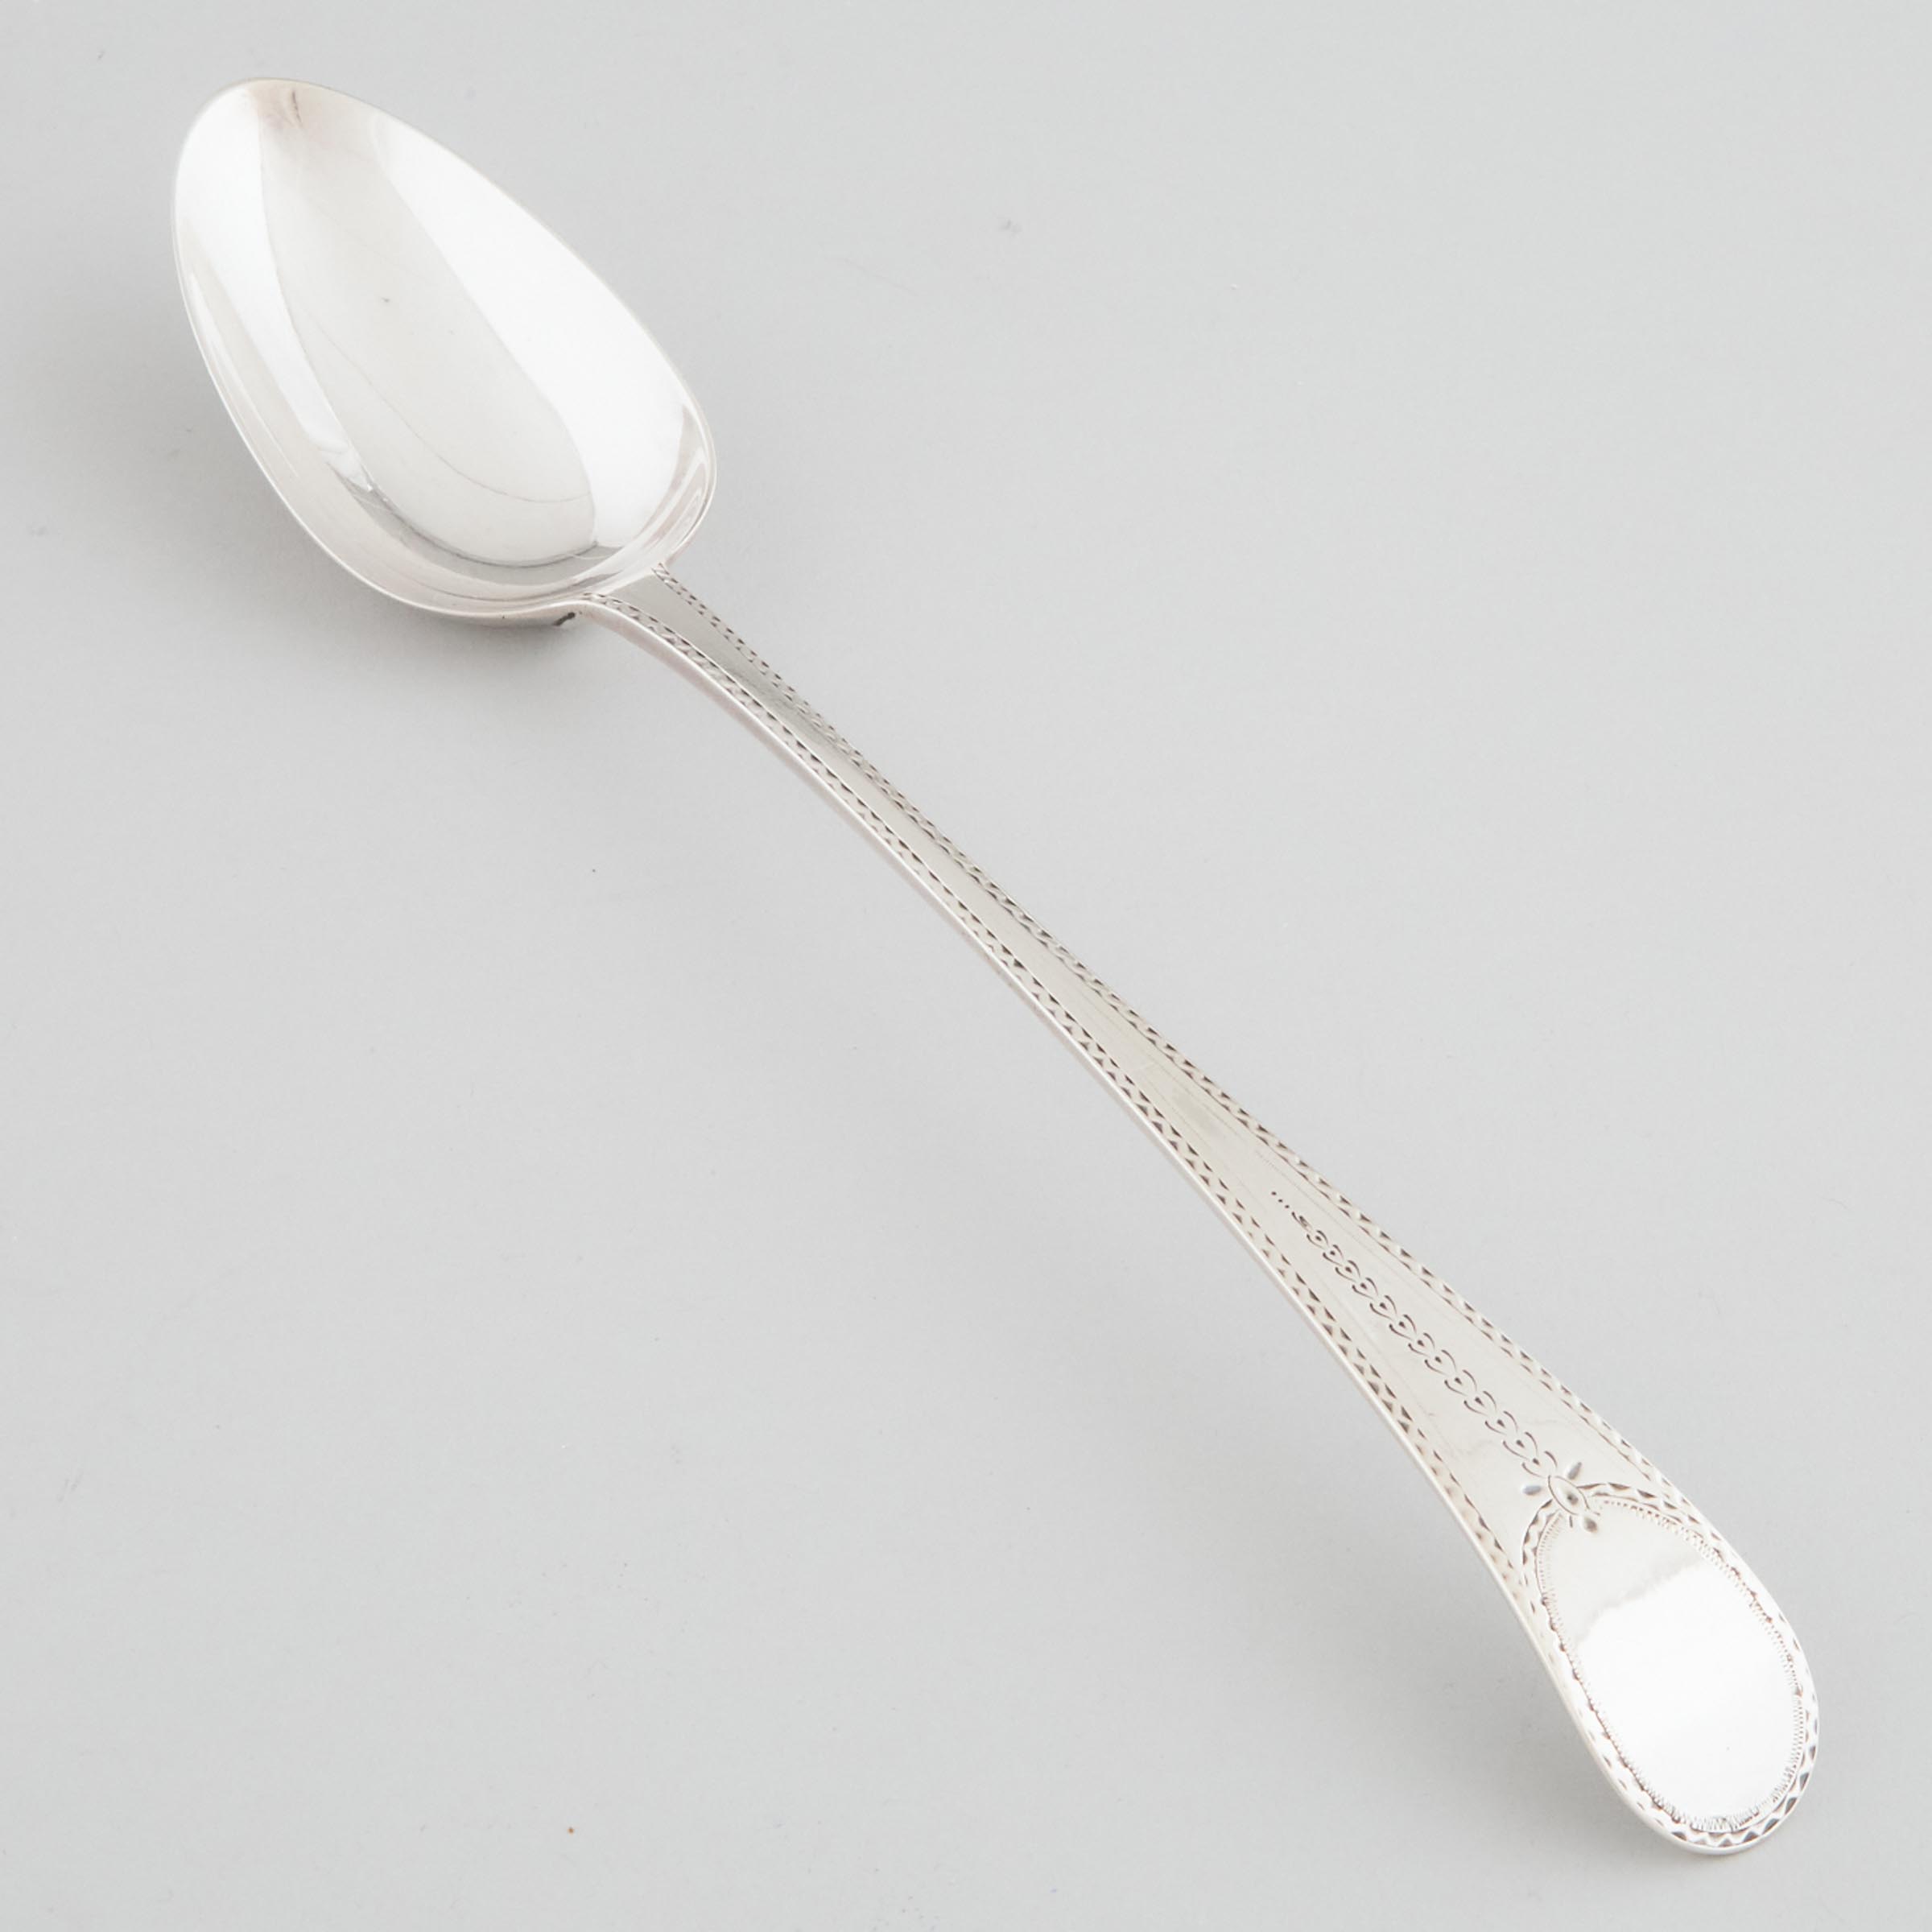 George III Silver Bright-Cut Serving Spoon, Hester Bateman, London, 1780